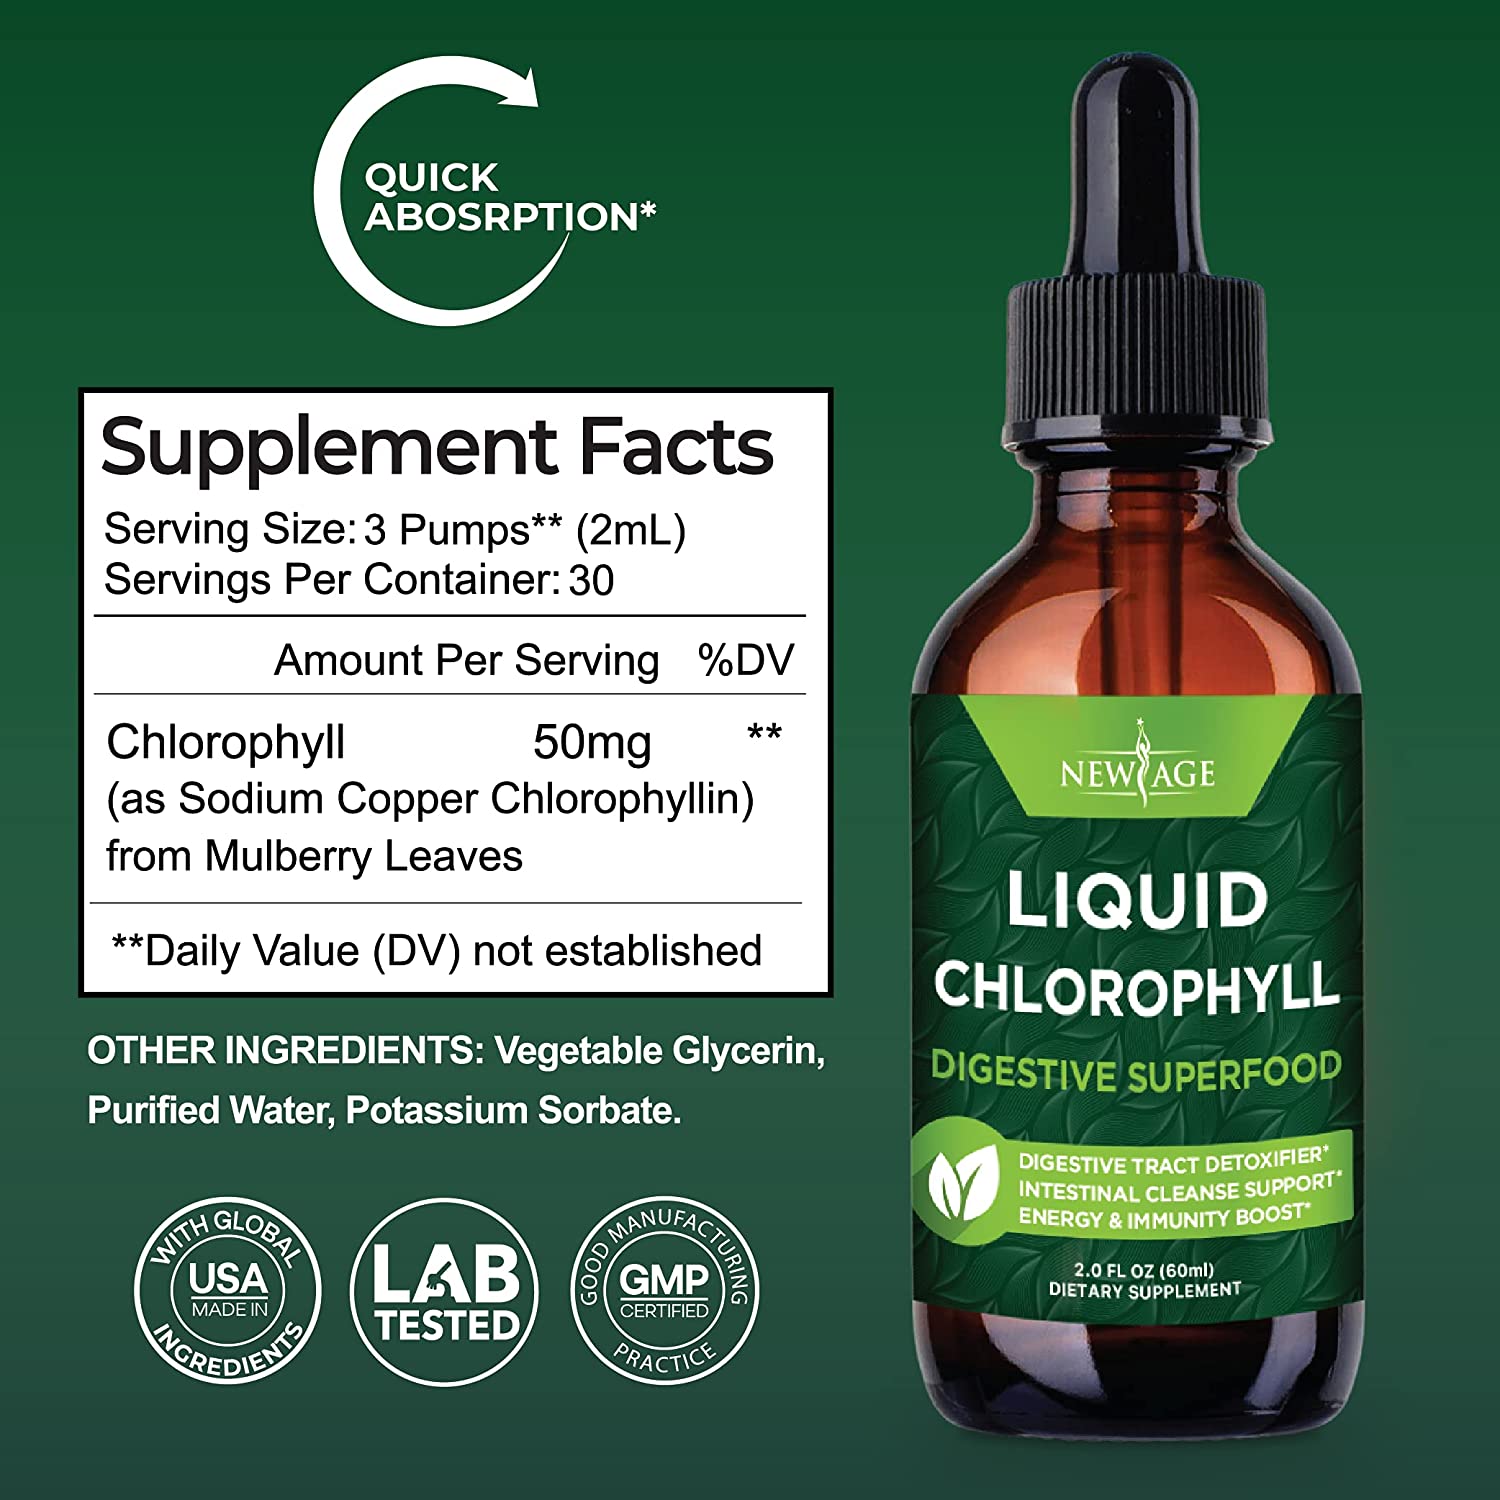 NewAge Liquid Chlorophyll Drops 60ml - Internal Deodorant, Detoxifier, Energy Support